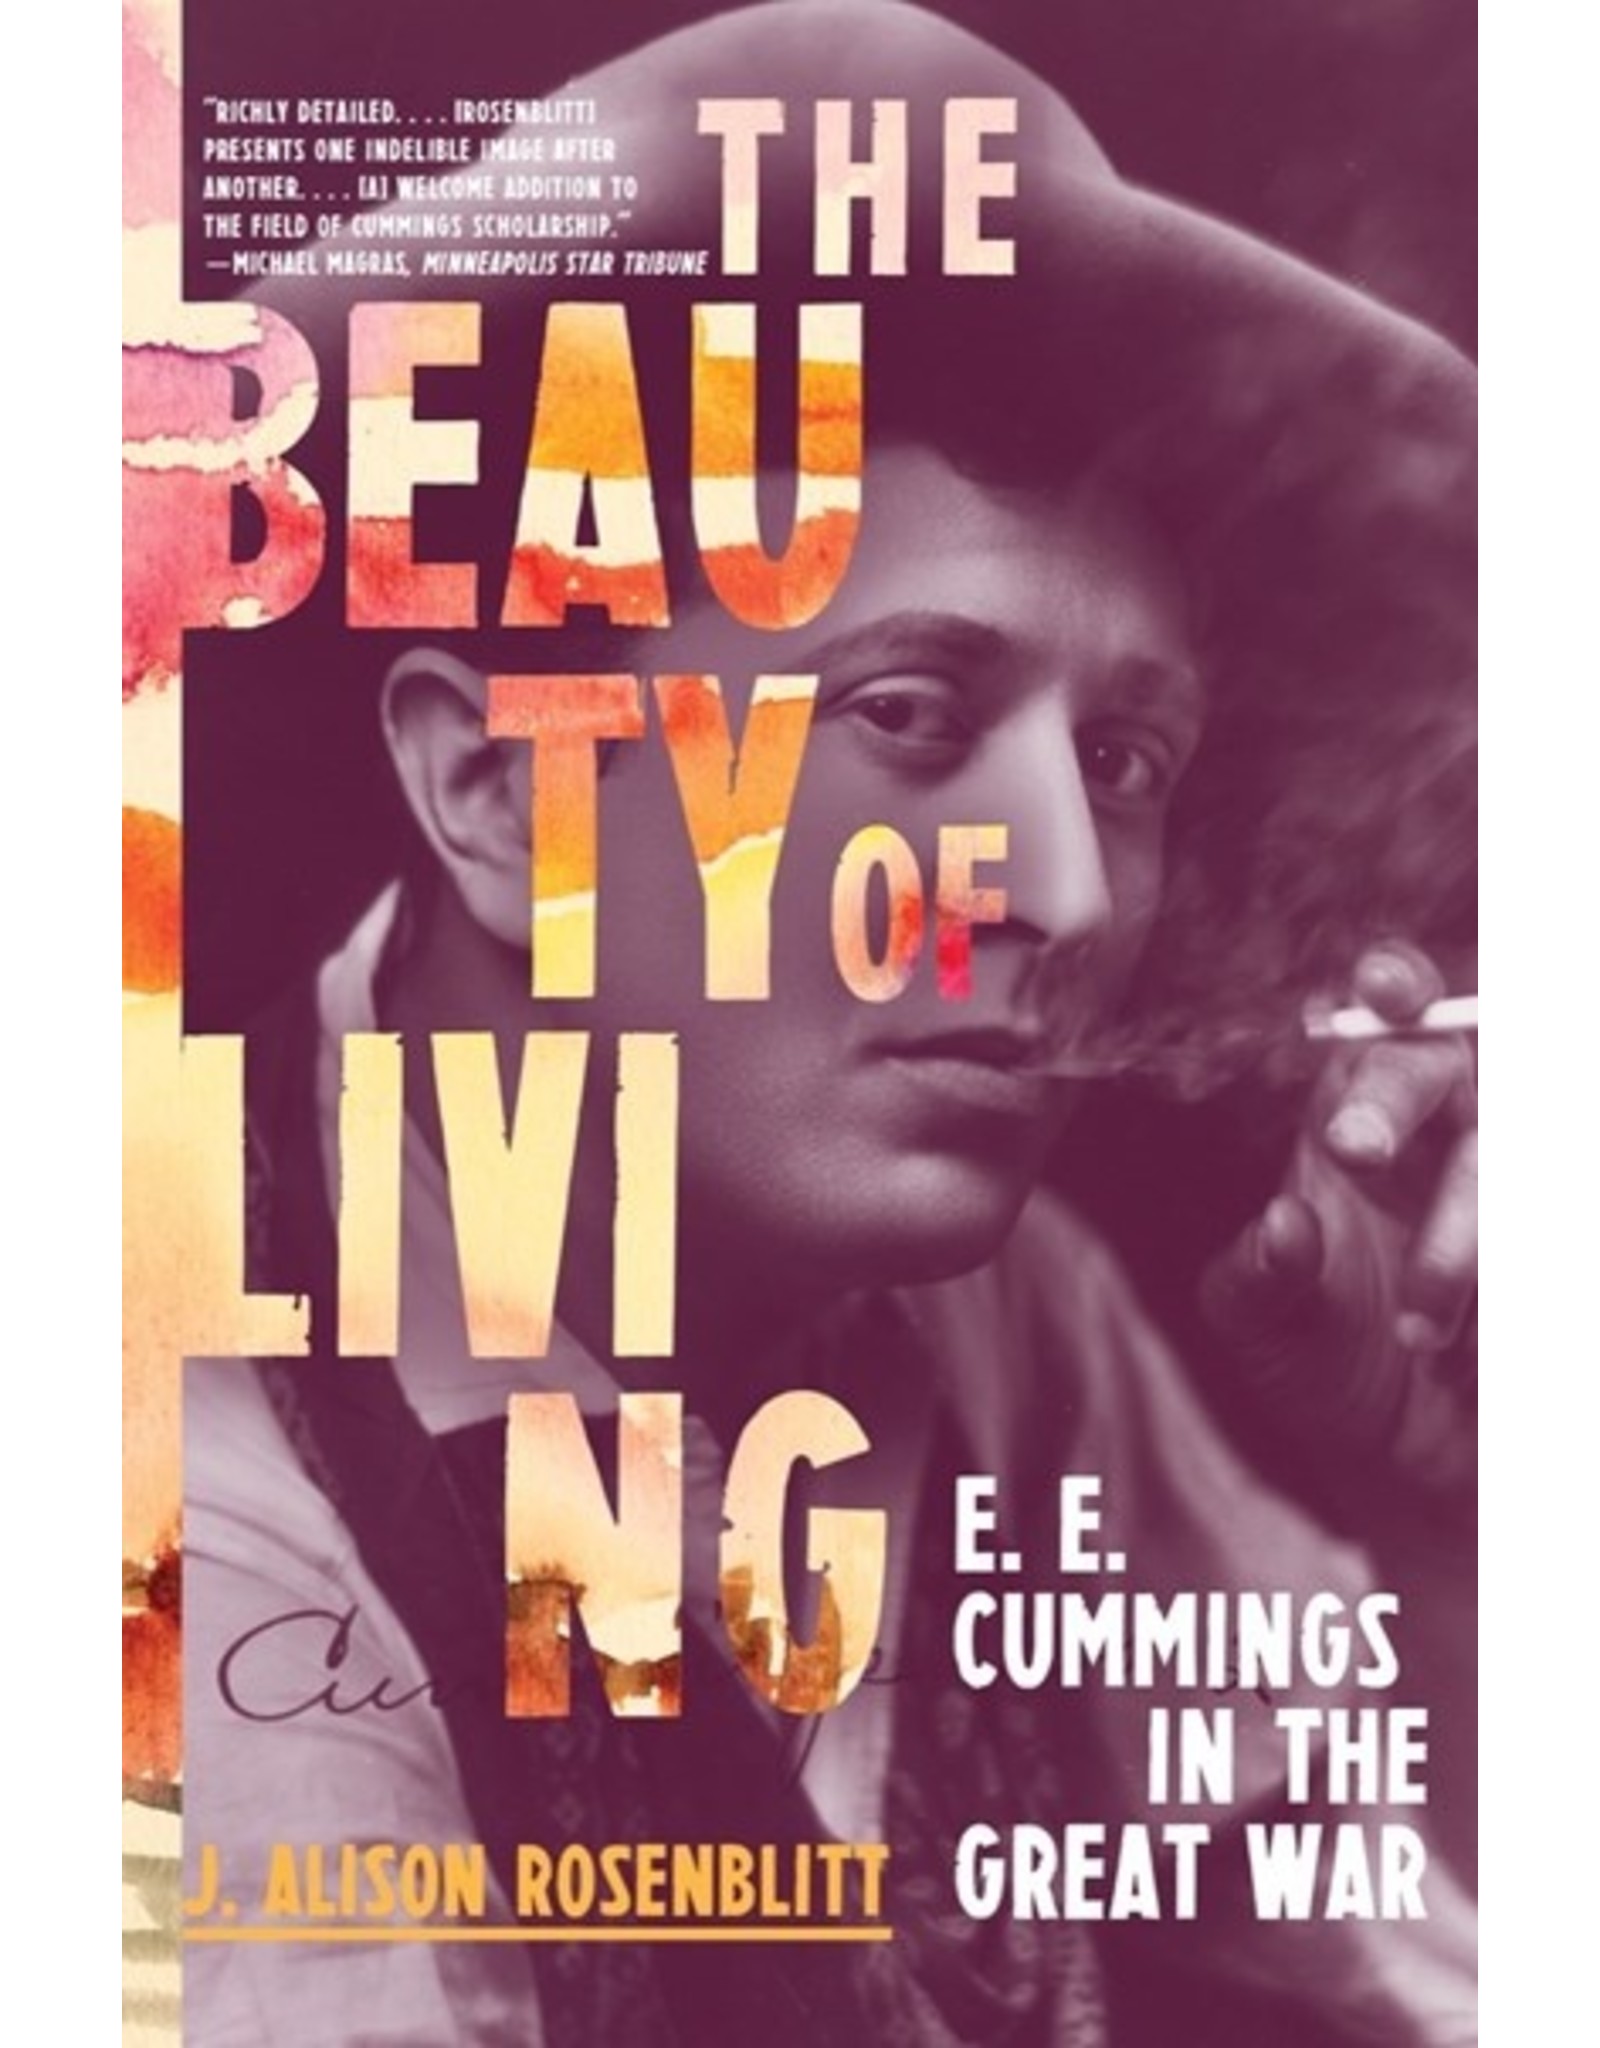 Books The Beauty of Living by E.E. Cummings in the Great War by J. Allison Rosenblitt